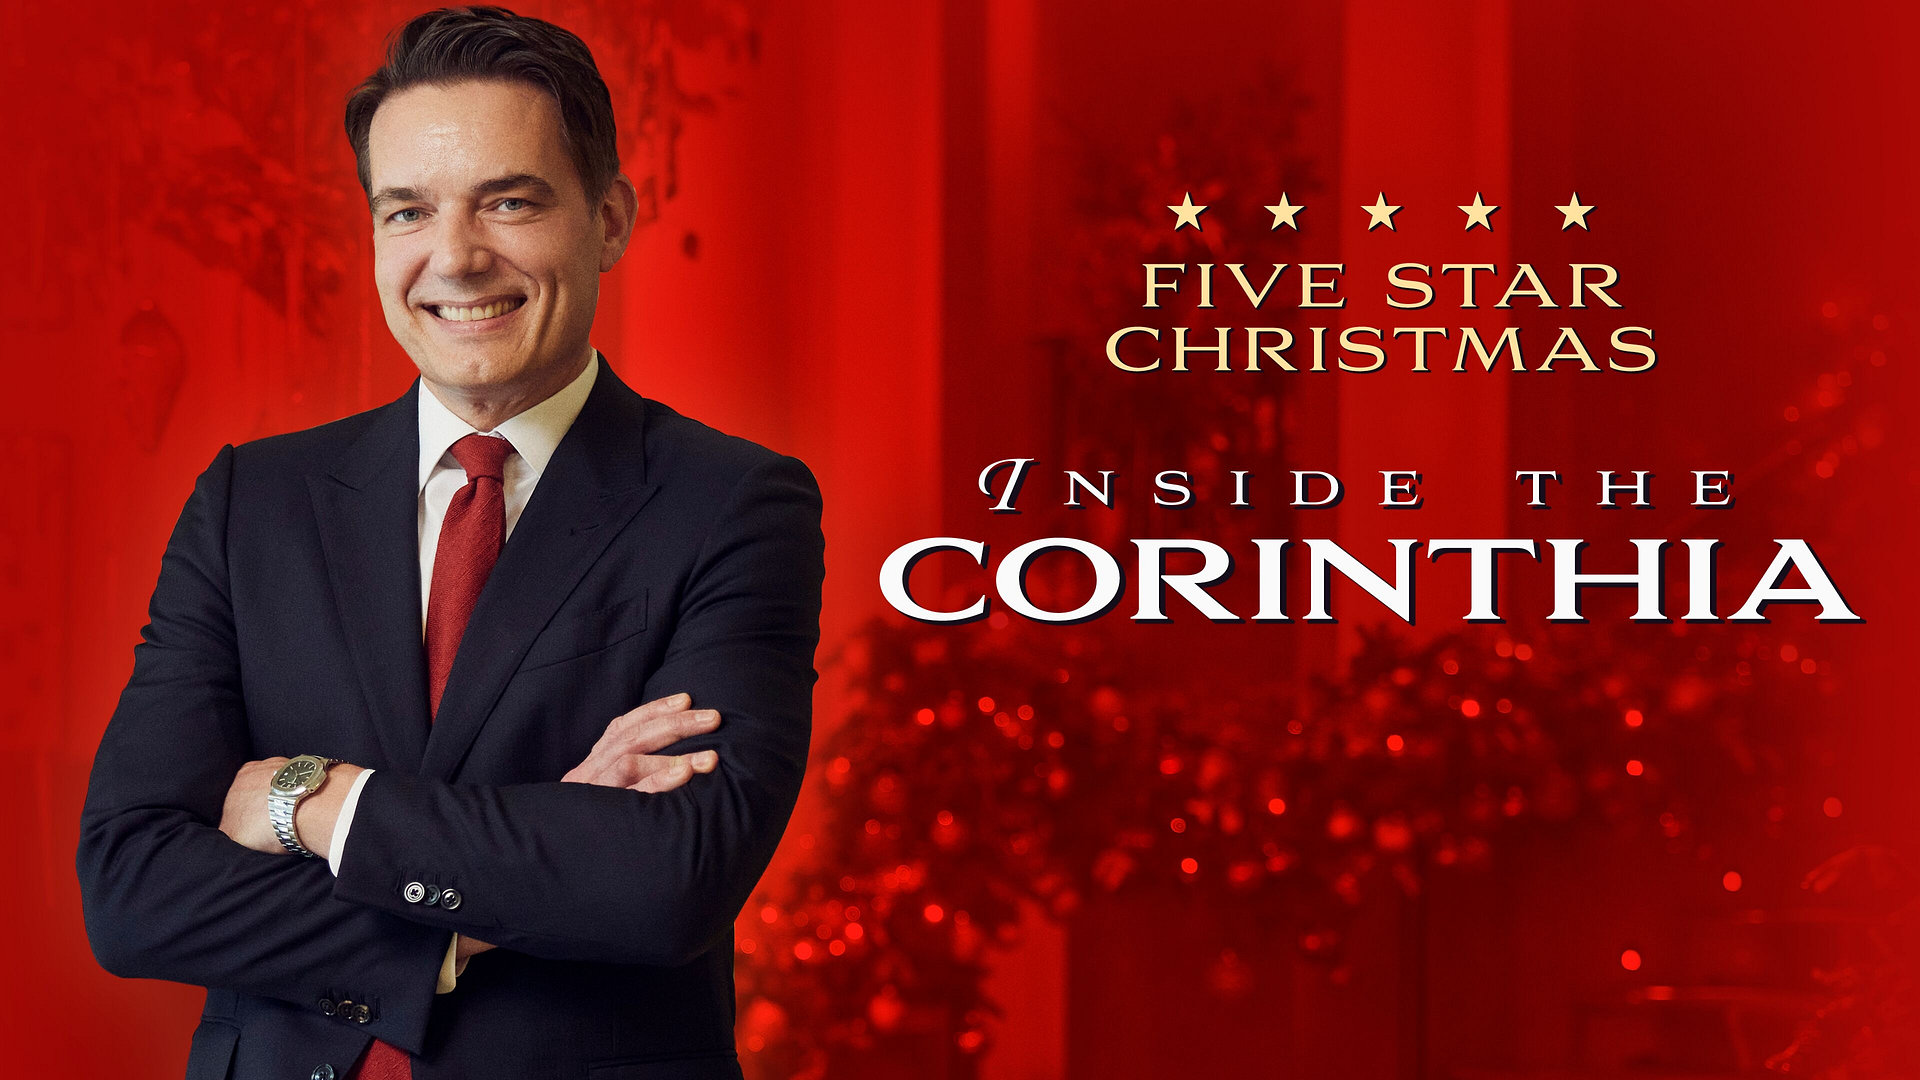 Five star Christmas: Inside the Corinthia